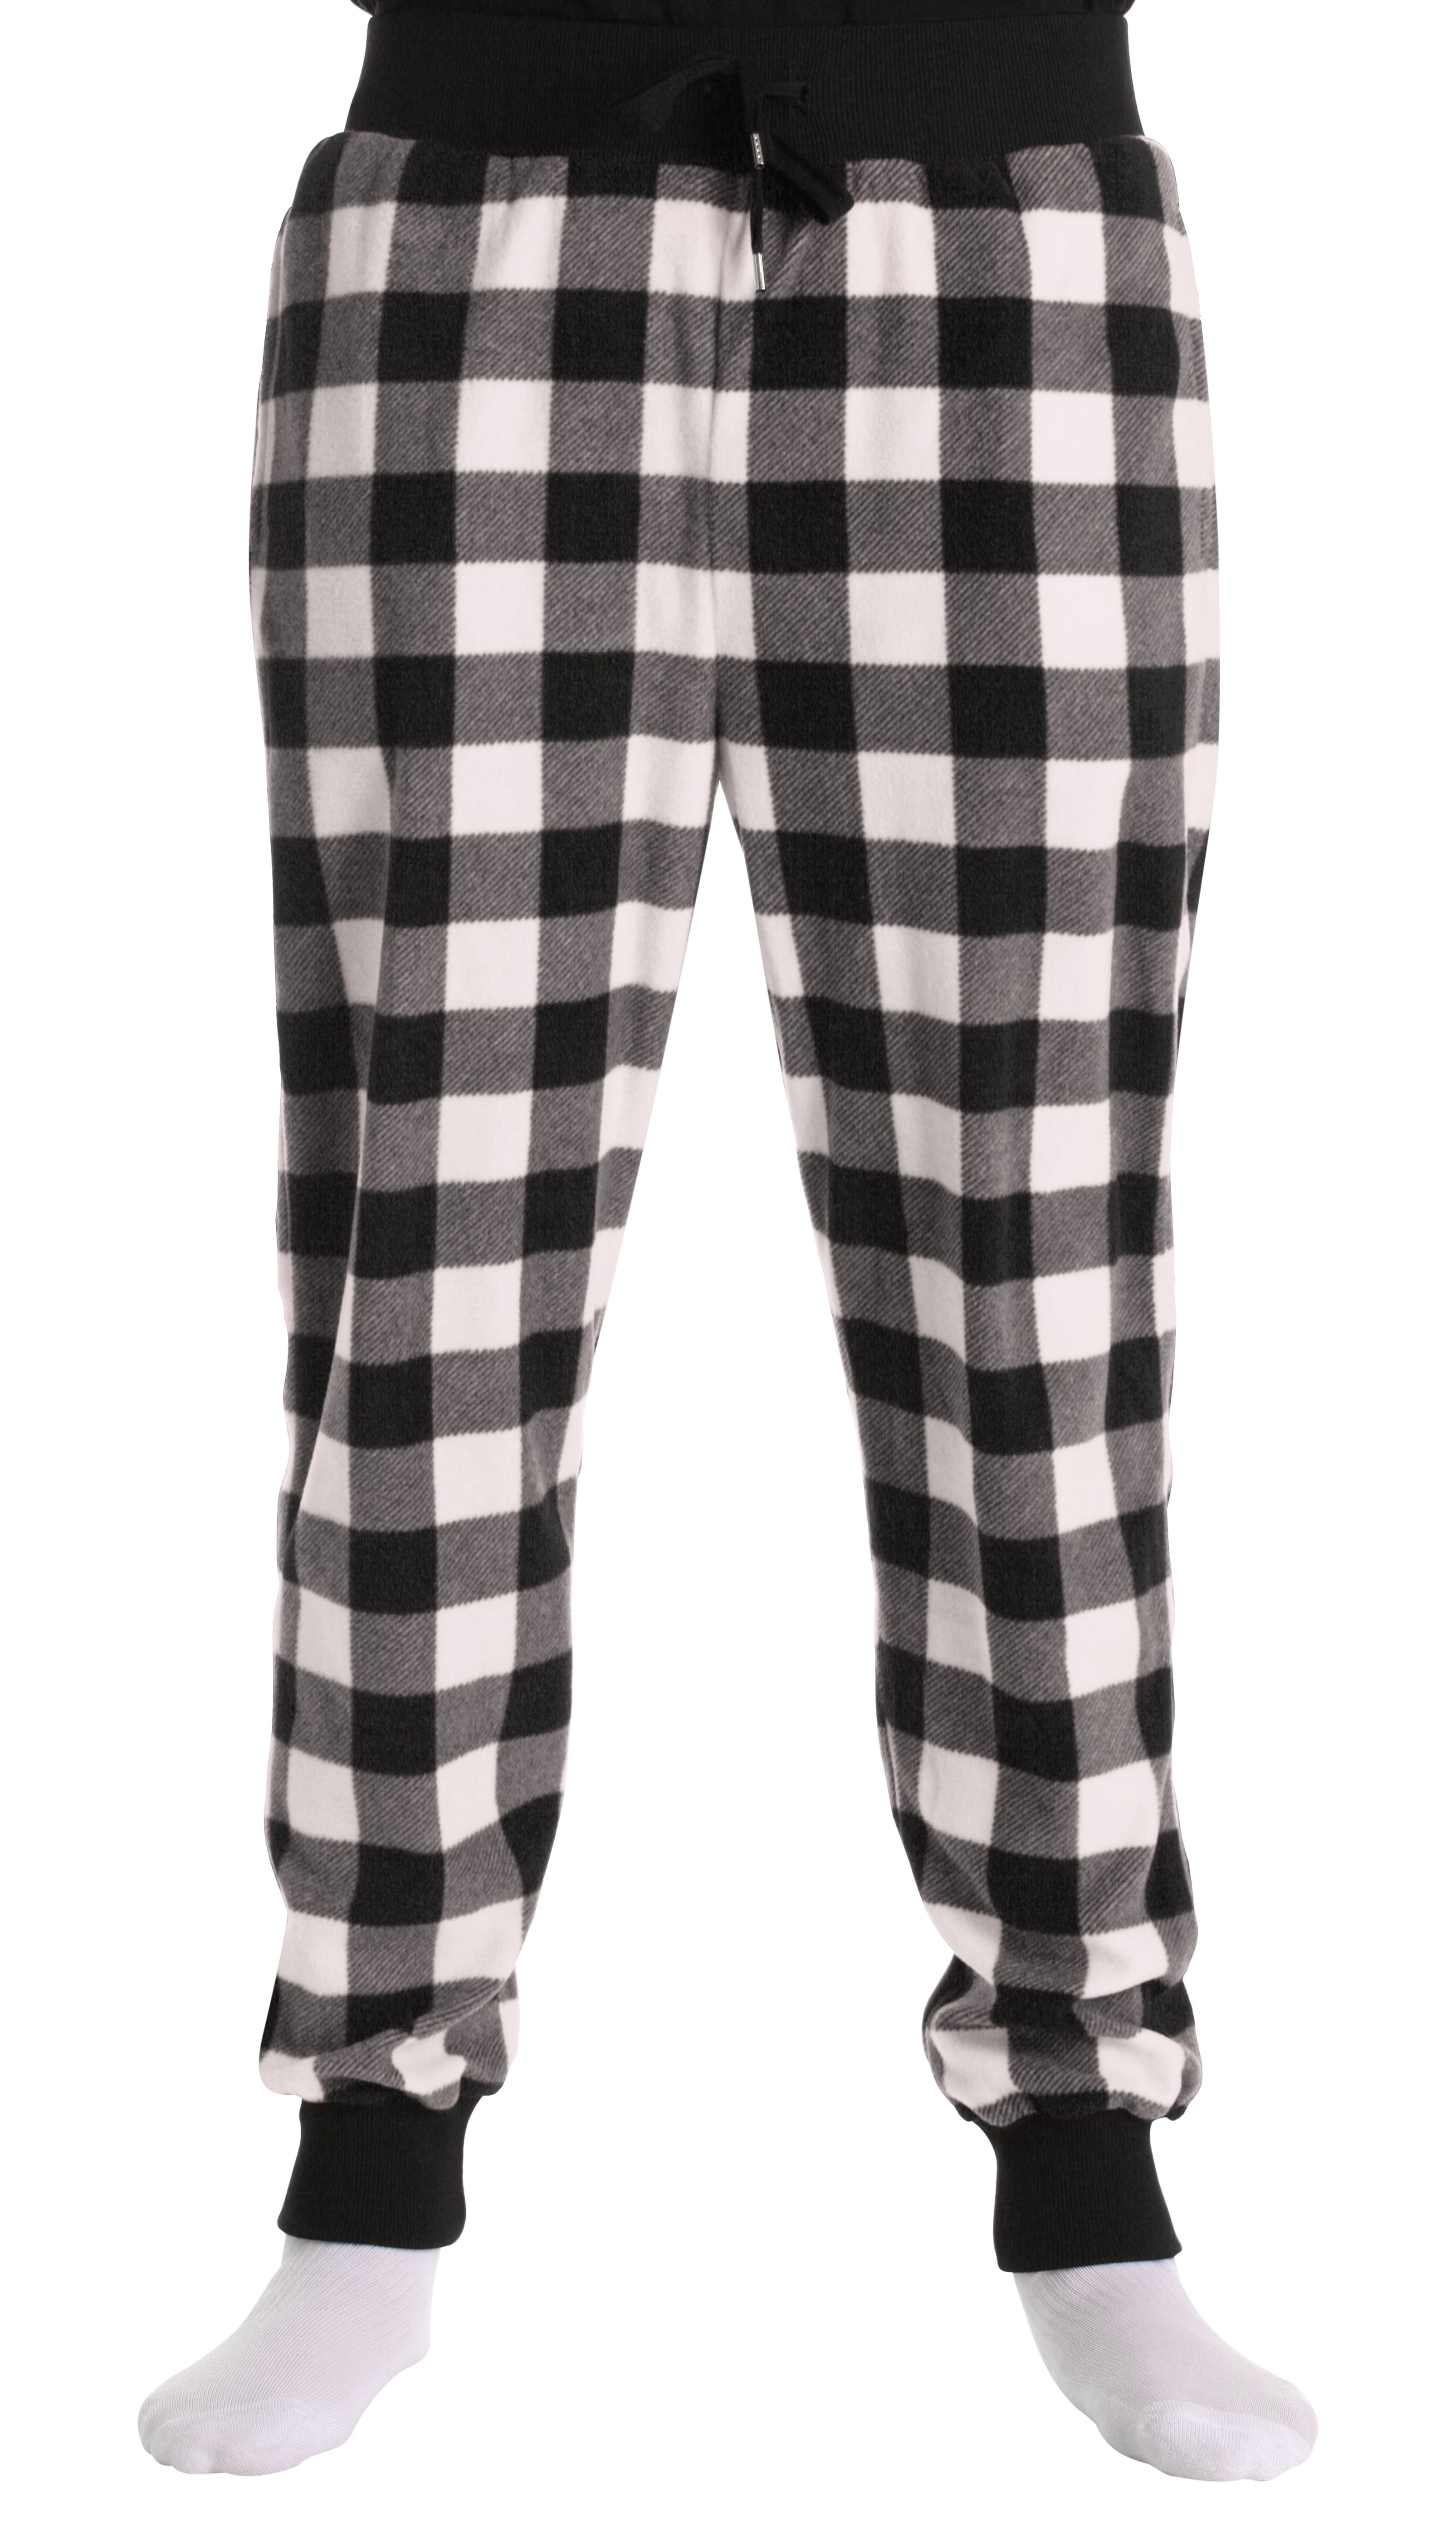 #followMe Men's Microfleece Buffalo Plaid Pajama Pants with Pockets ...